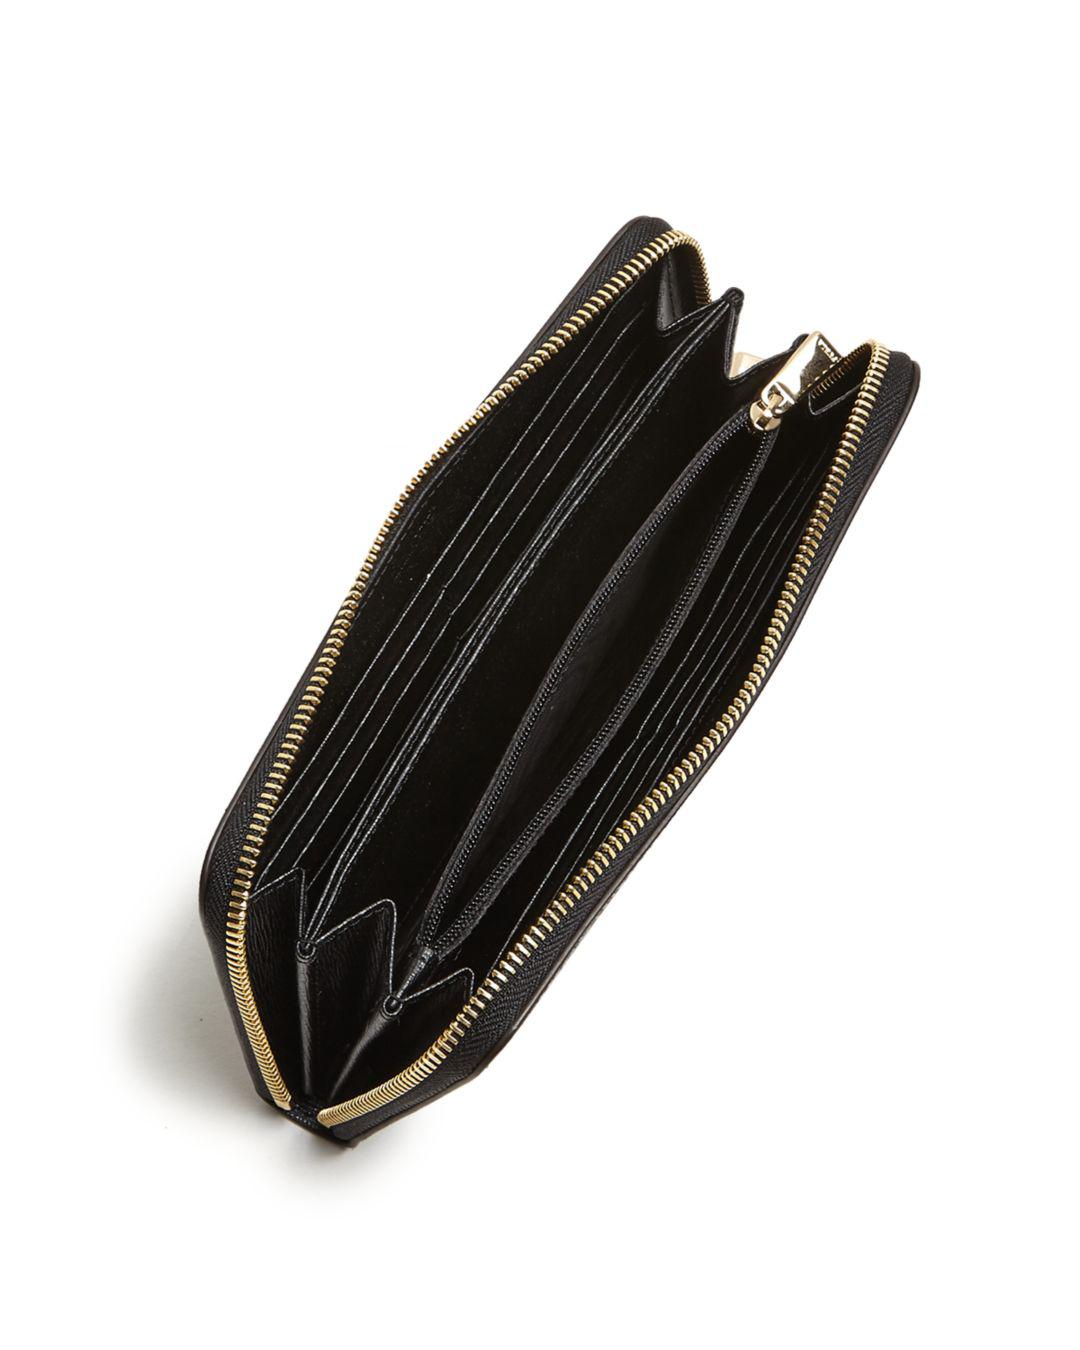 Furla Babylon Zip Around Extra Large Leather Wallet in Black - Lyst